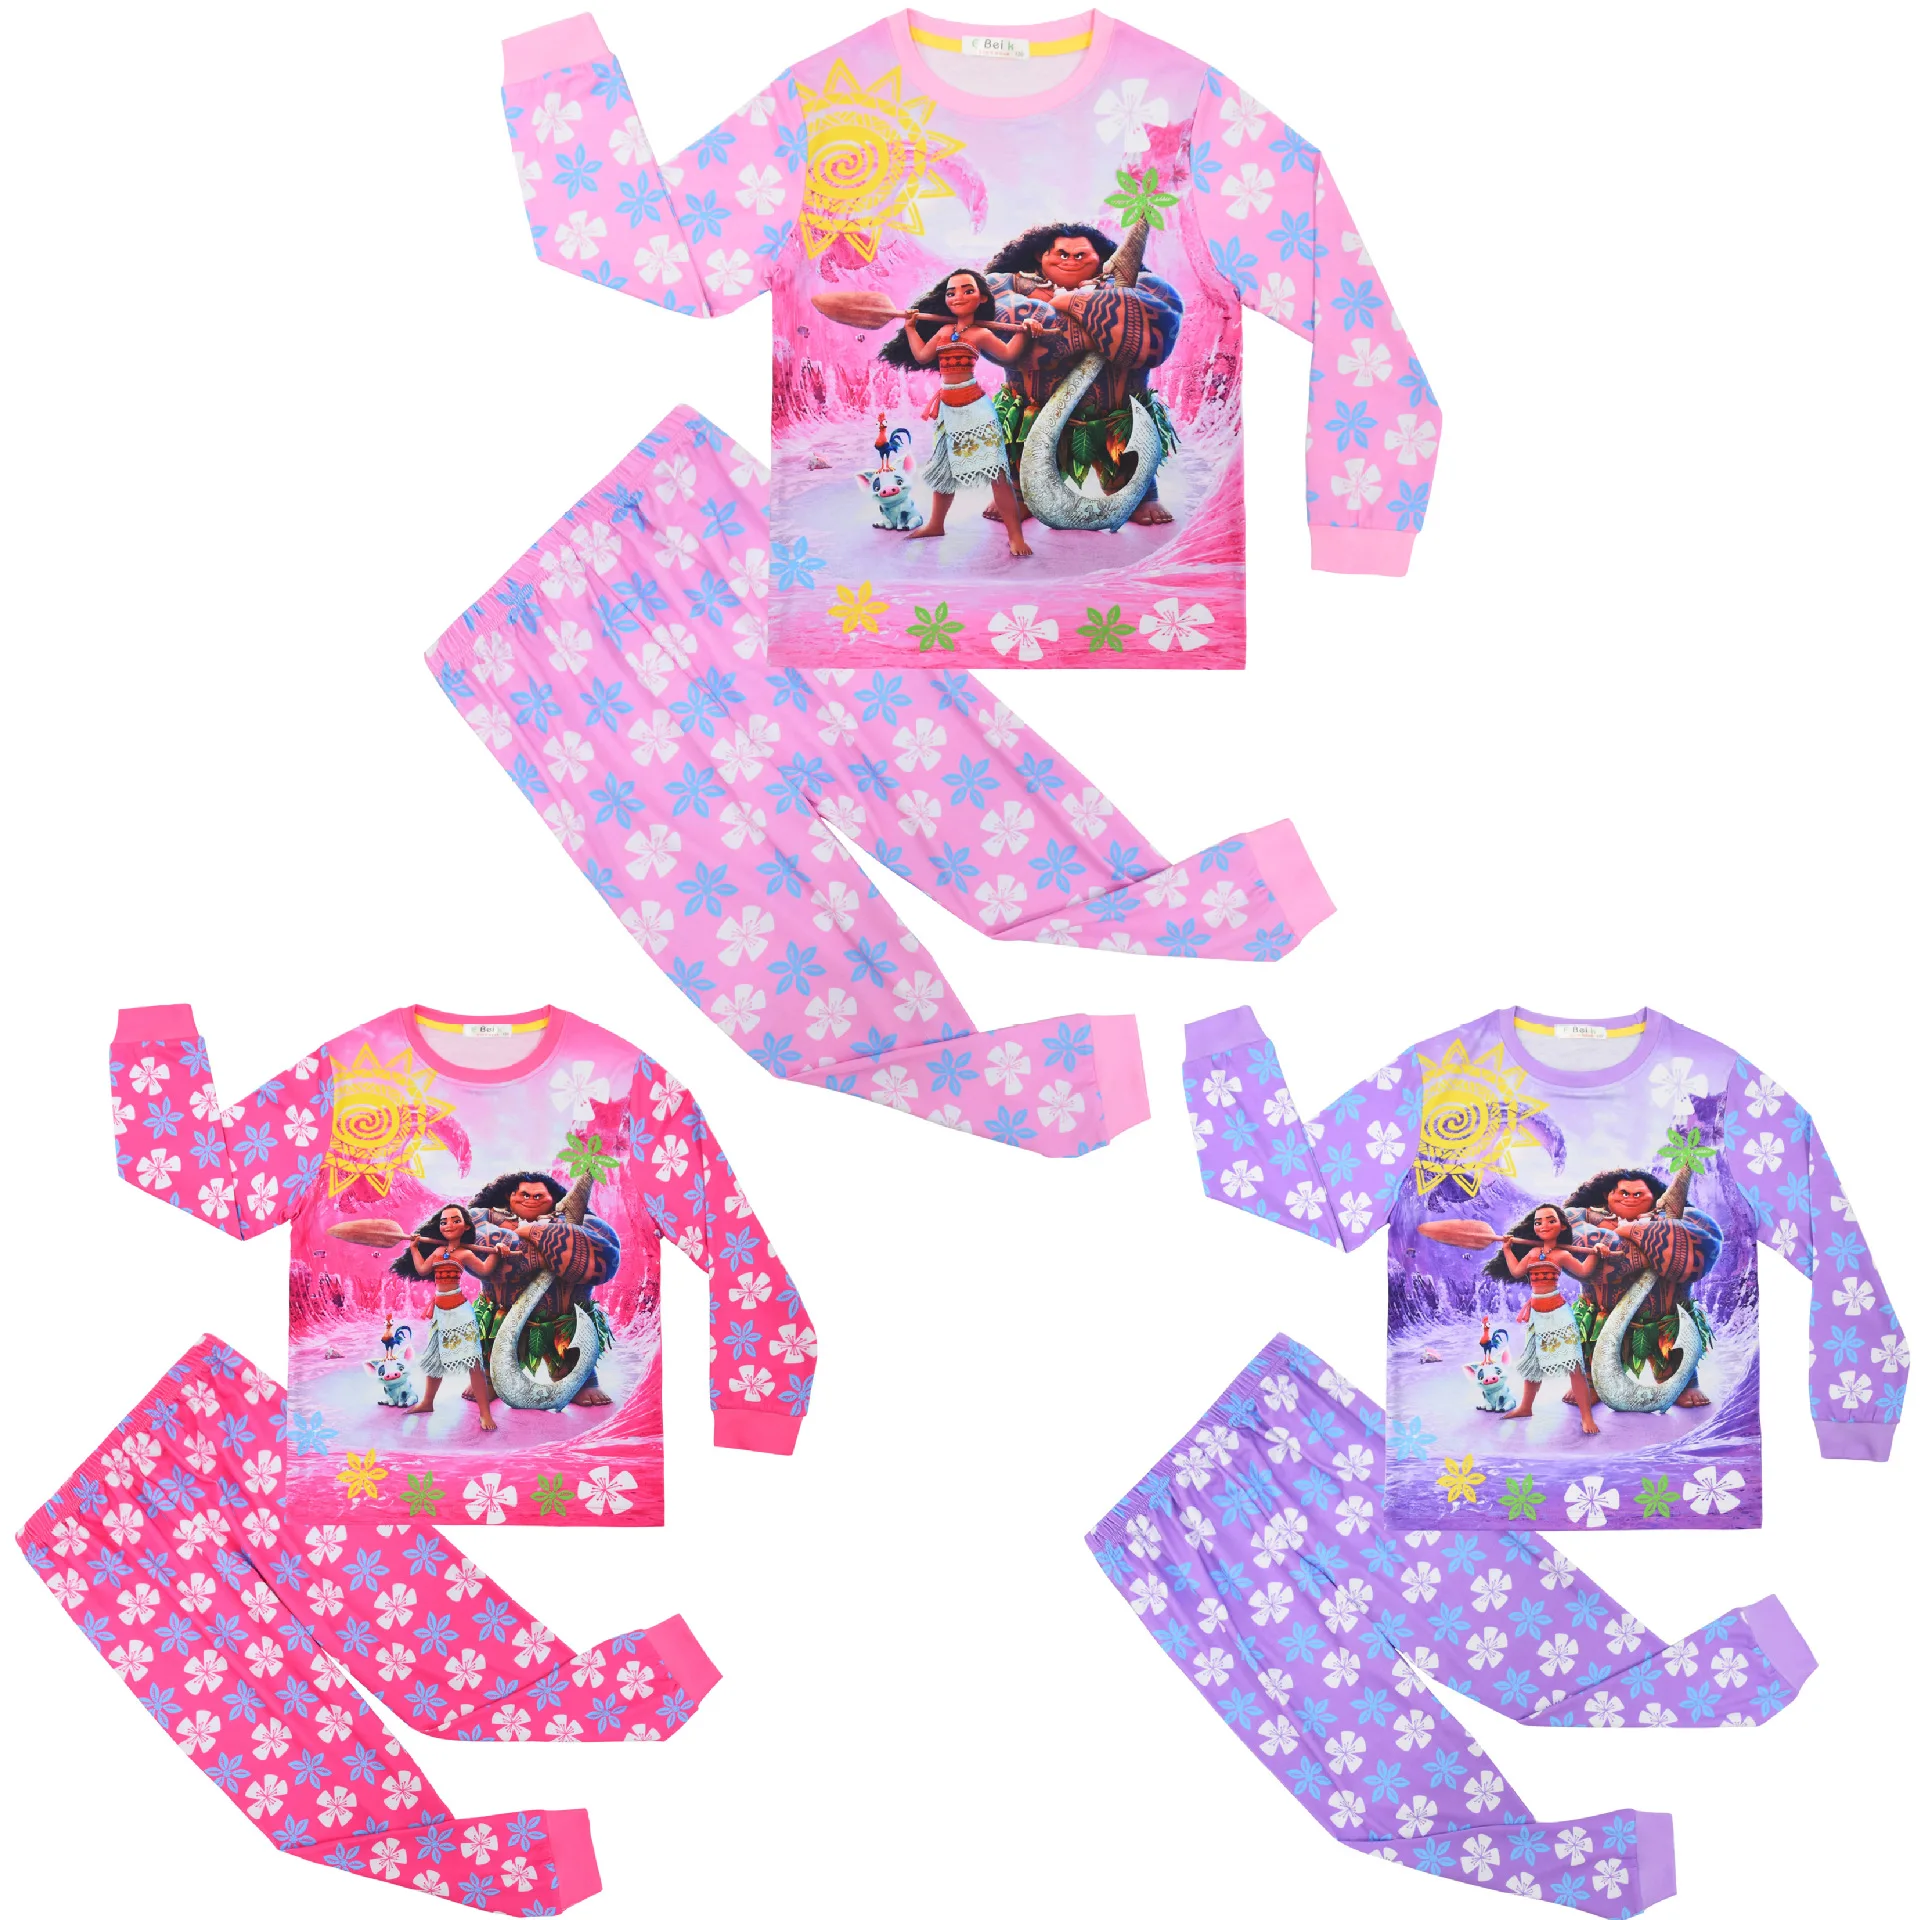 Fashion New Moana Girl Sleepwear Clothing Toddlr Kids Pyjamas Children Pajamas Tops Pants Homewear Outfit Set home service suit